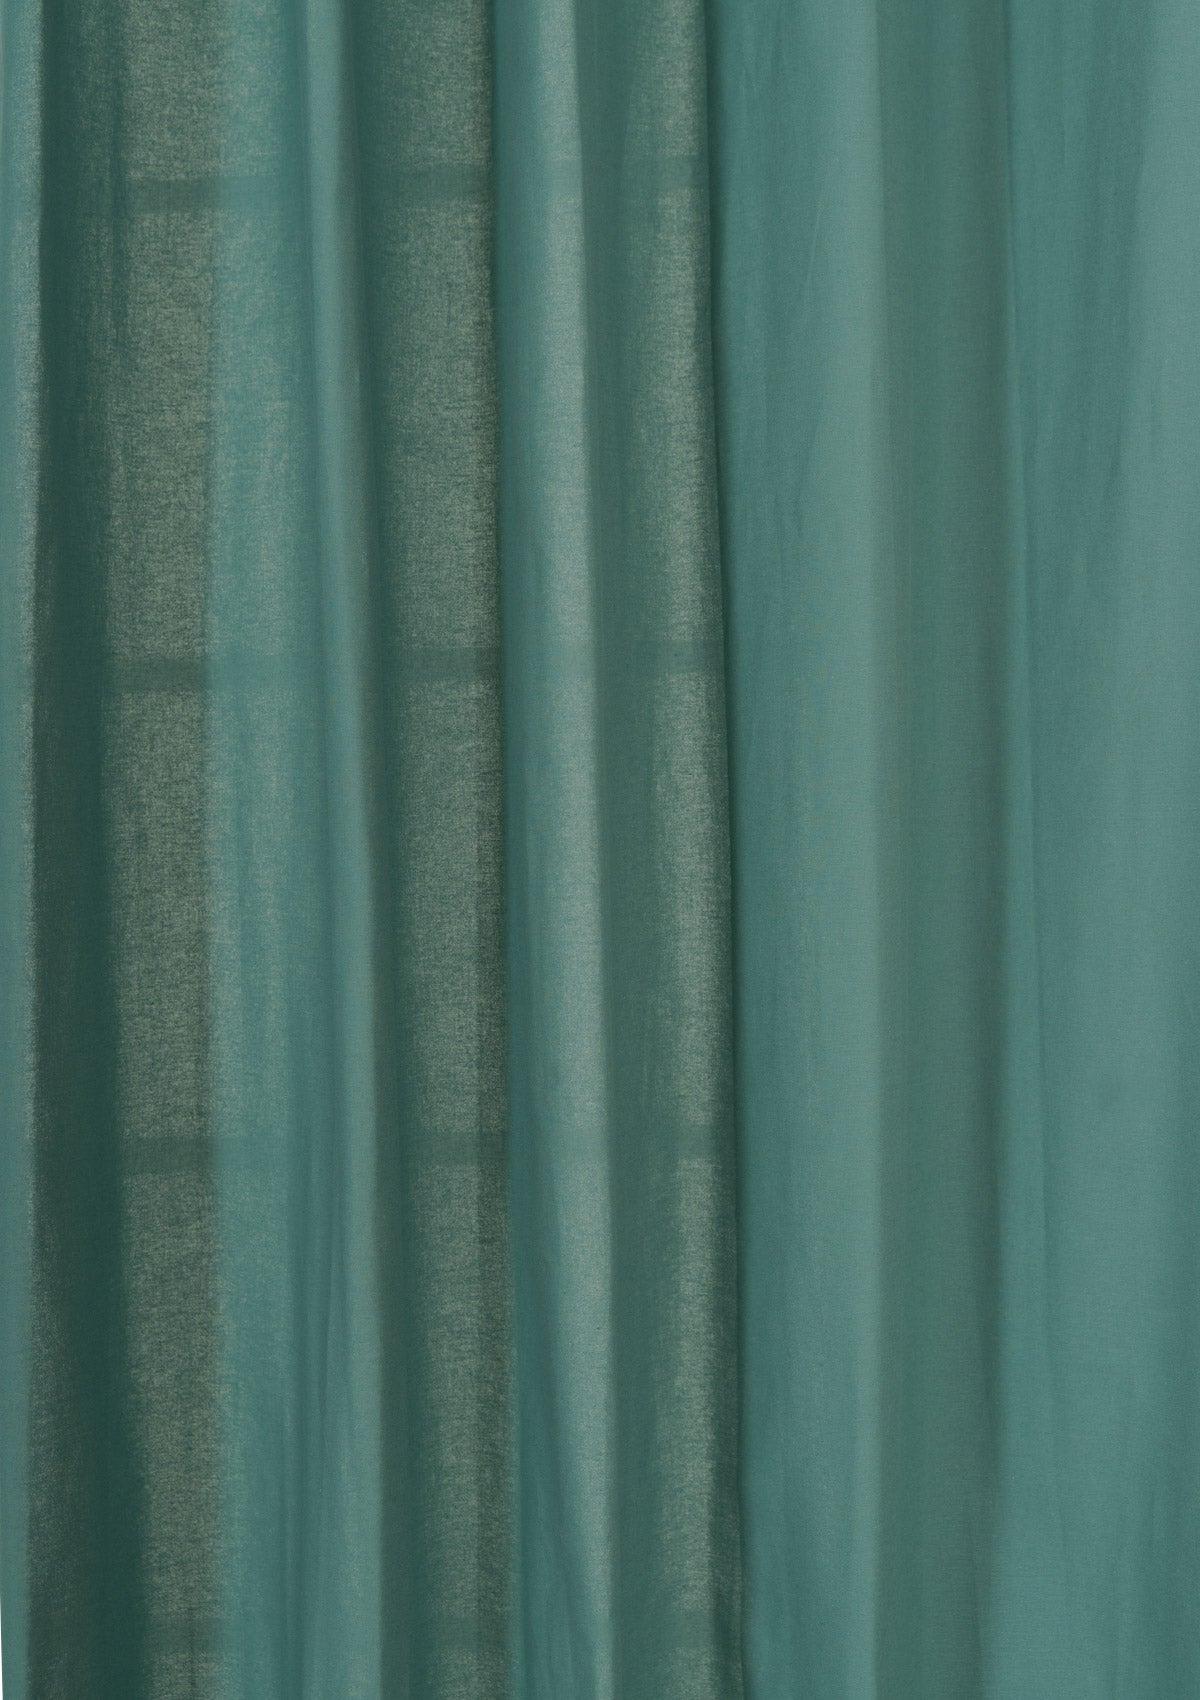 Solid aqua blue 100% cotton plain fabric for bedroom - Room darkening